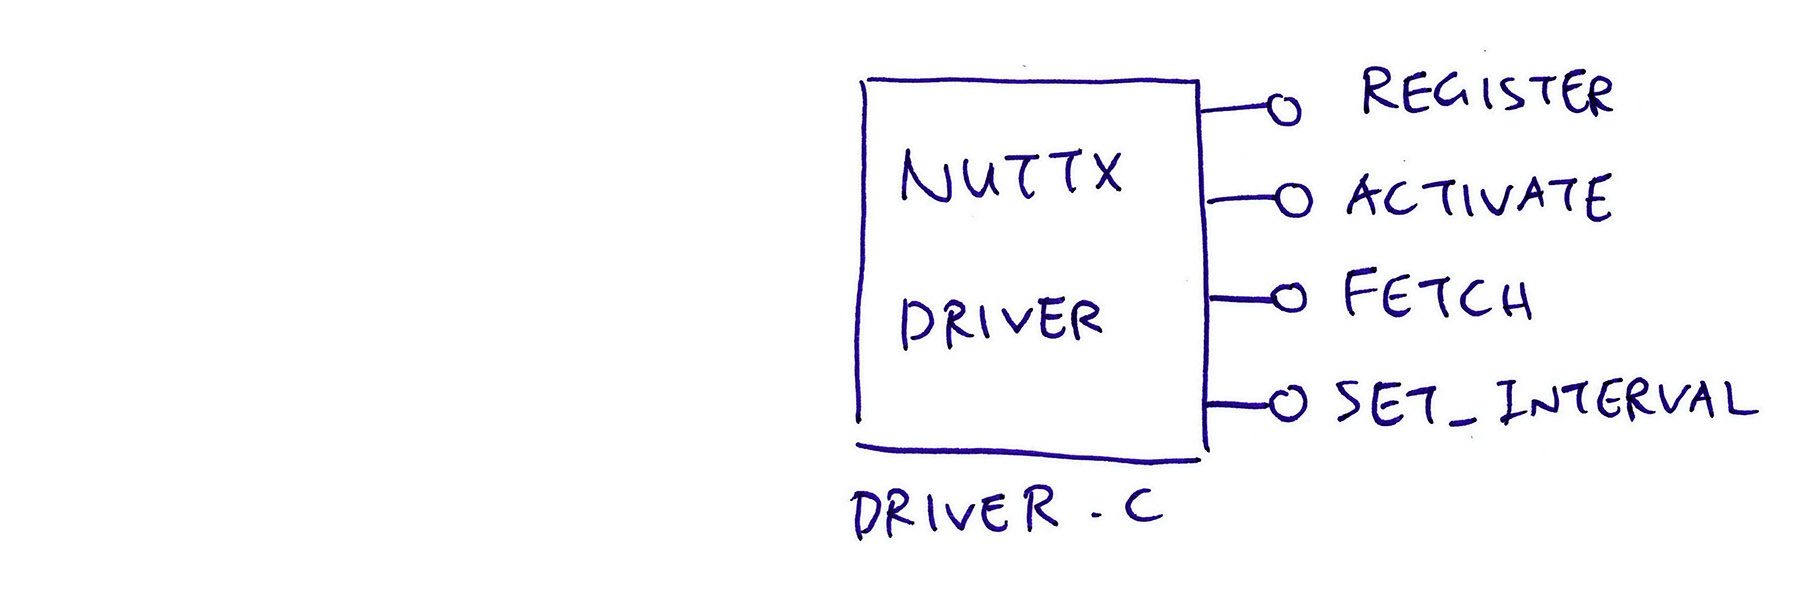 NuttX Driver